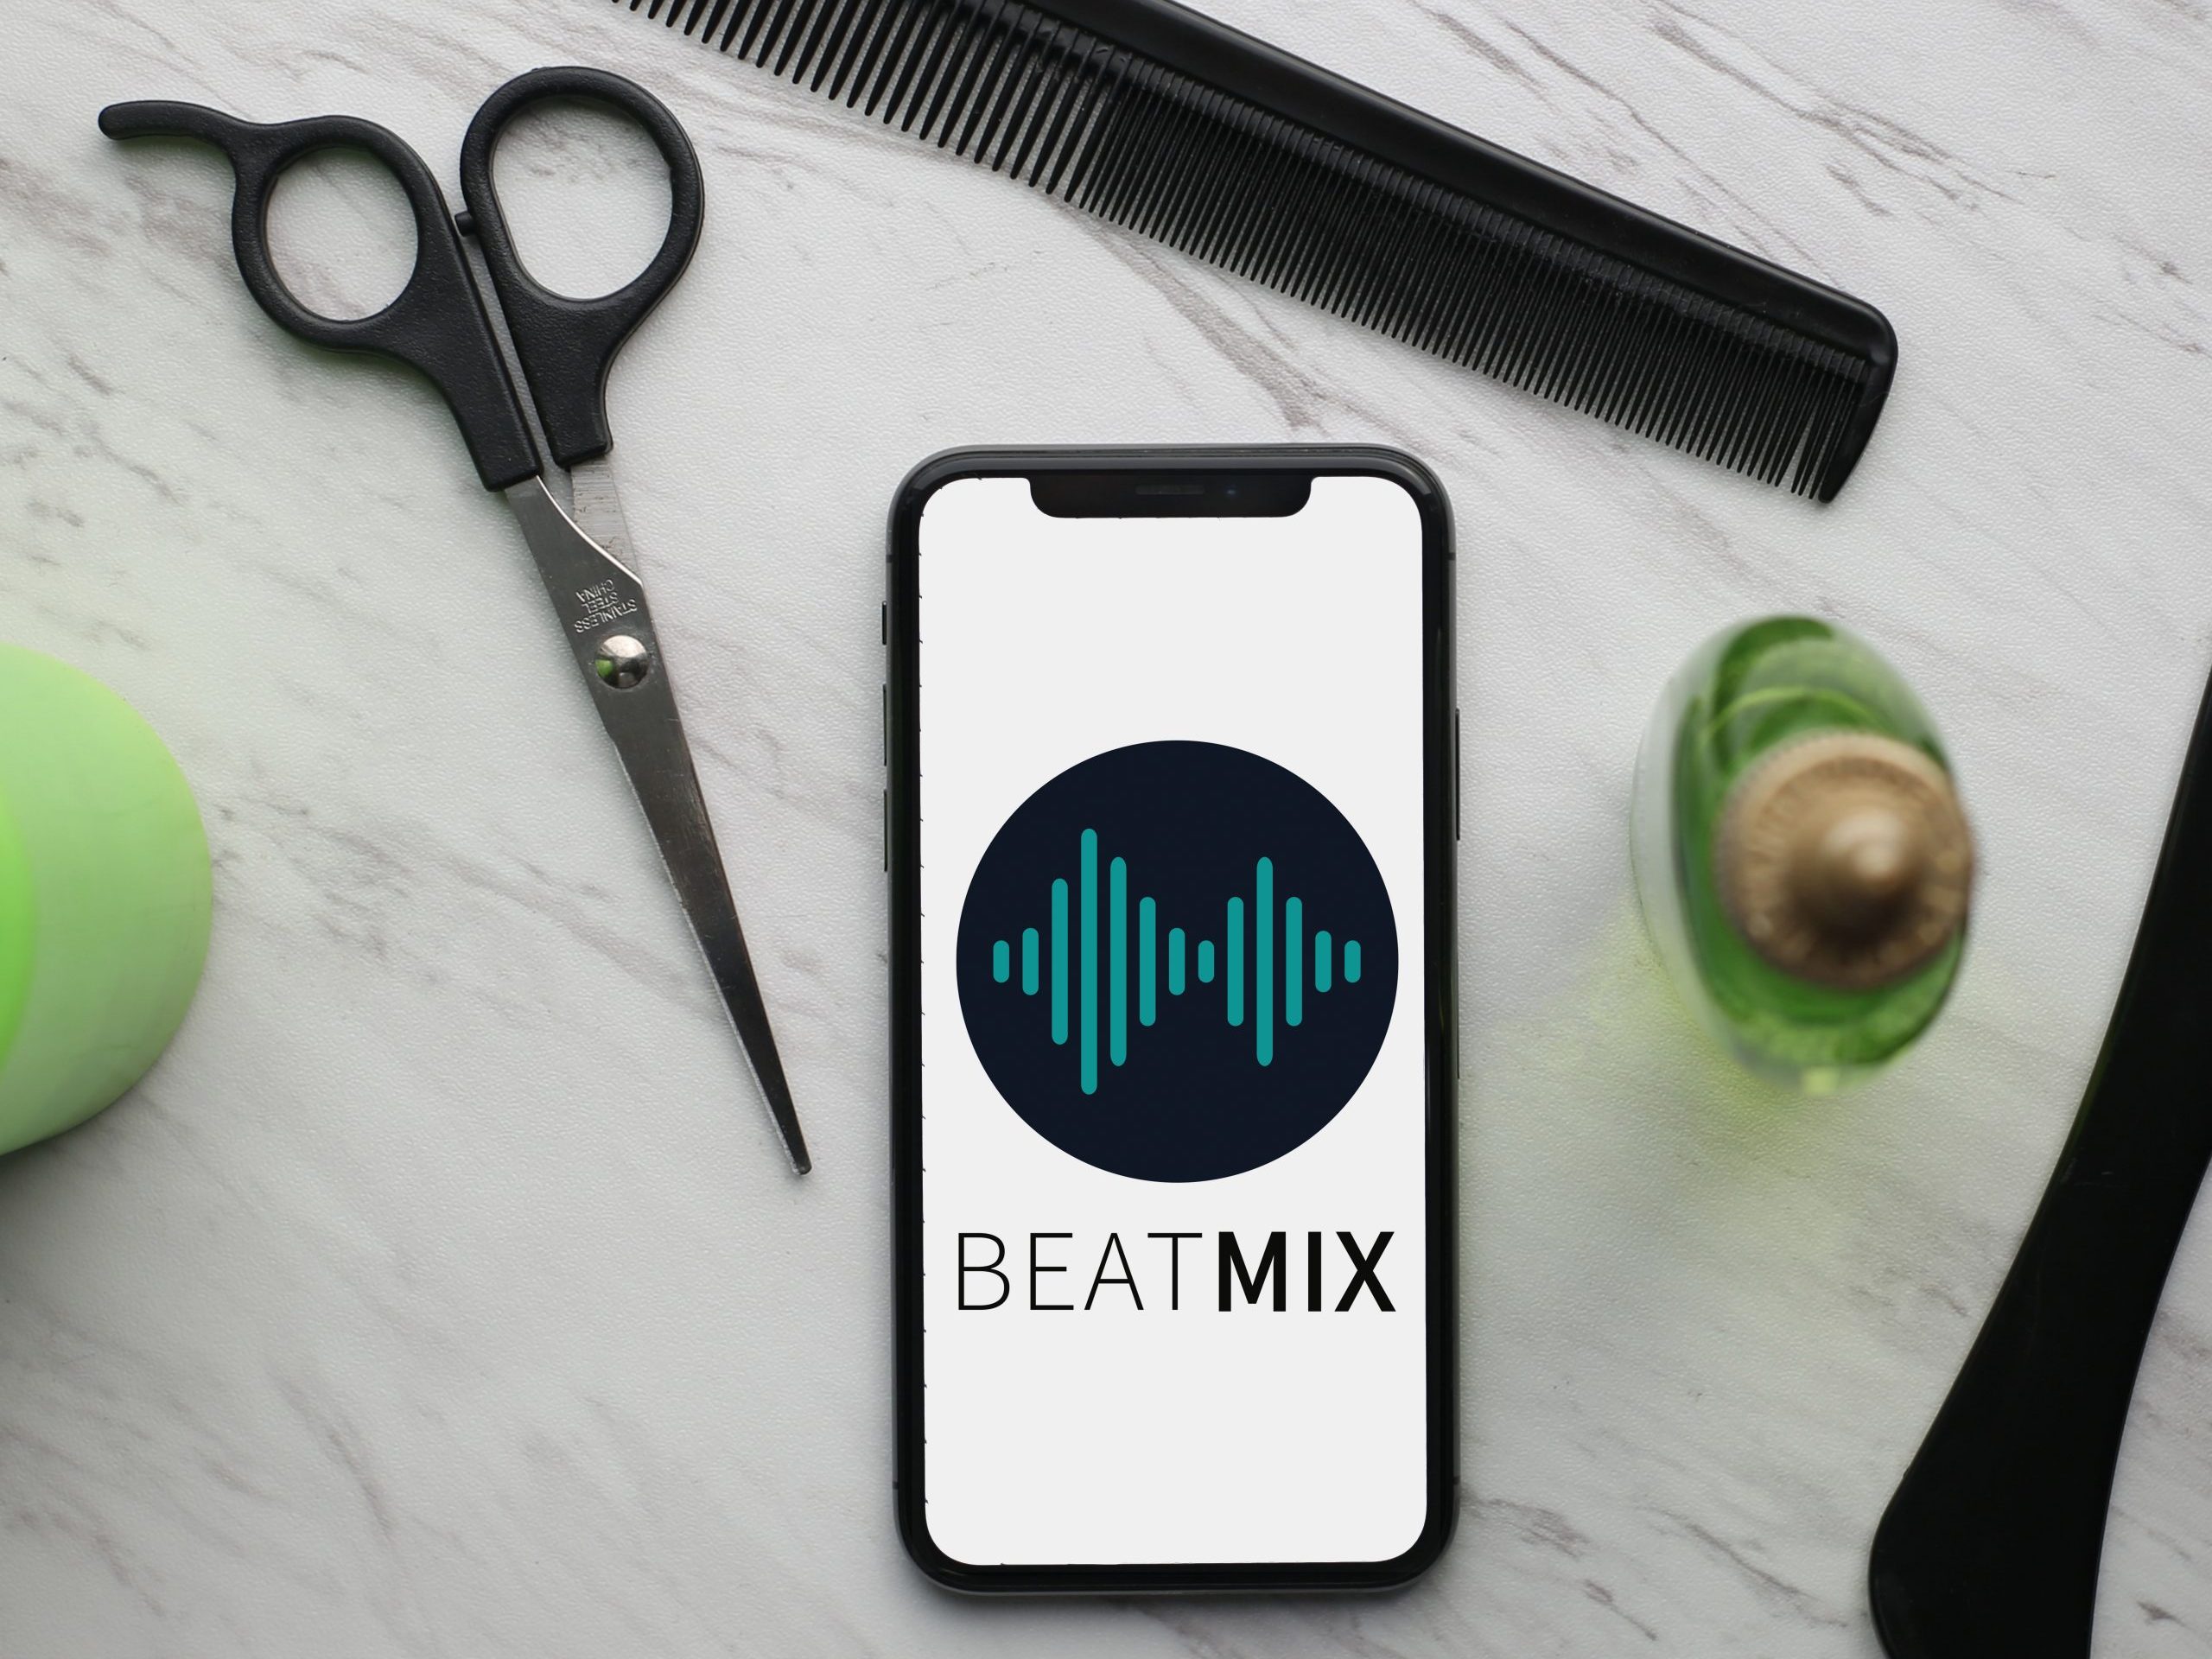 Beatmix Salon, iphone with beatmix logo